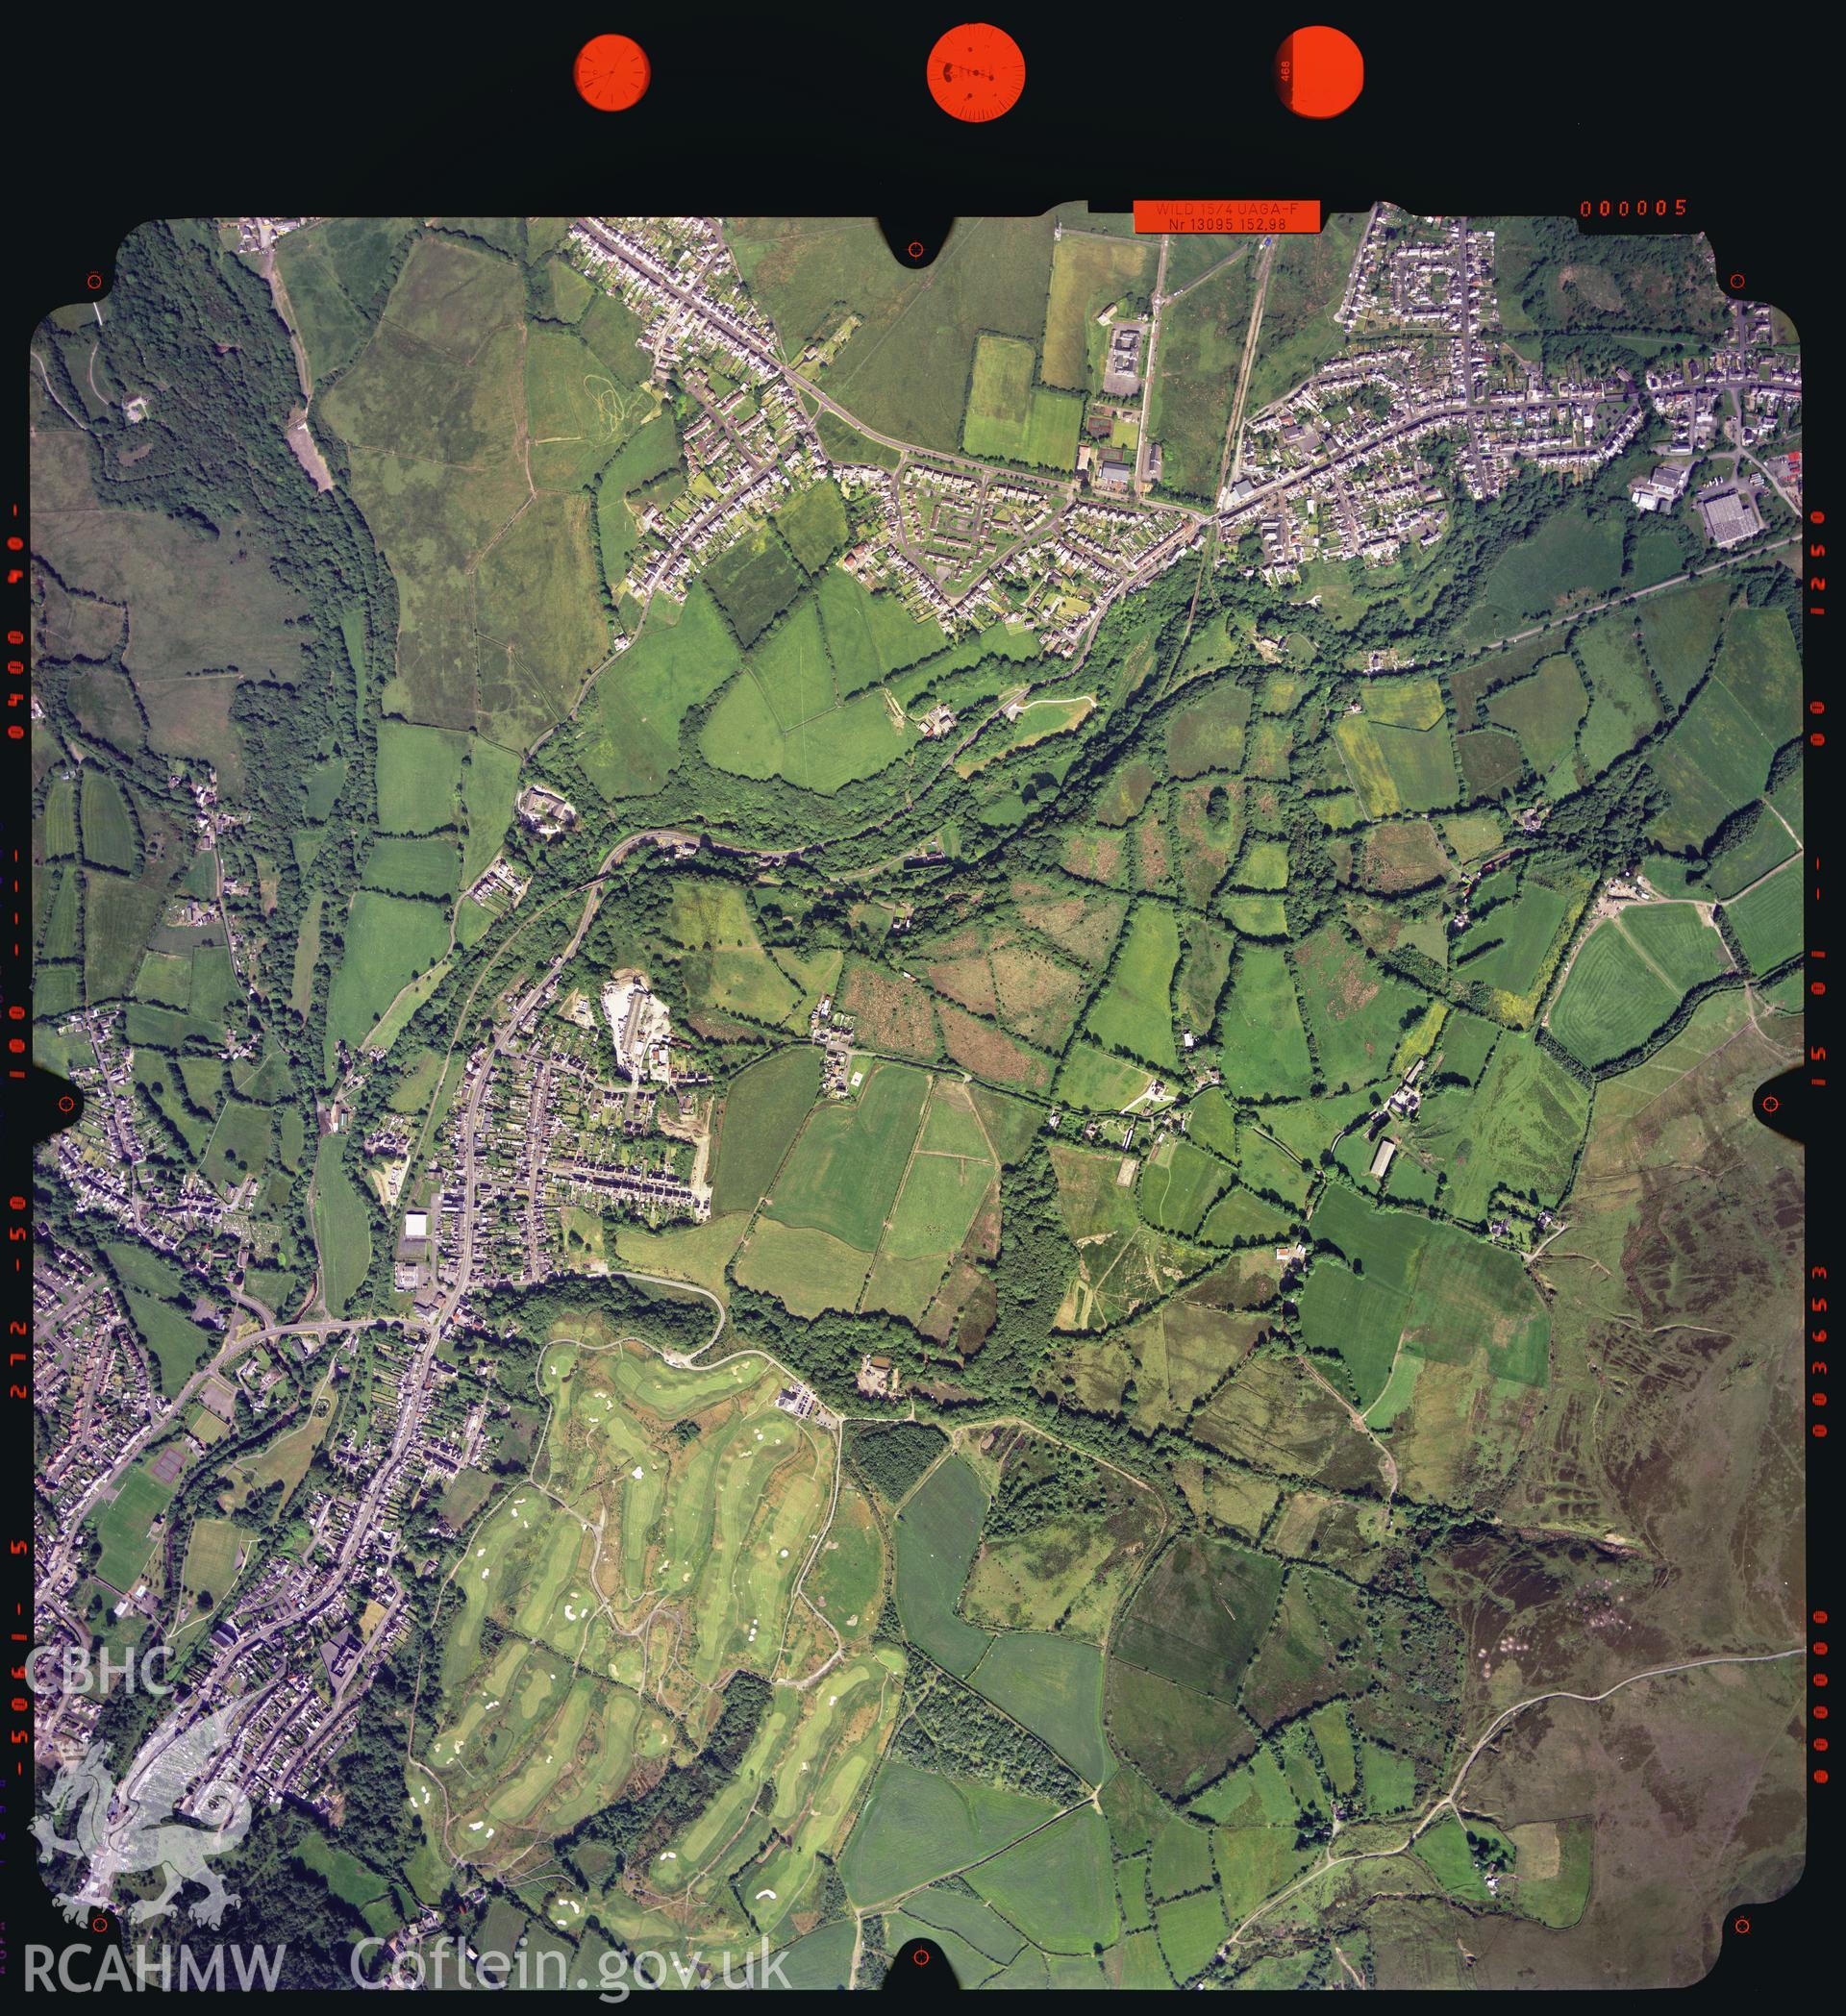 Digital copy of an Ordnance Survey aerial view of Garnant, Carmarthen, dated 2003.